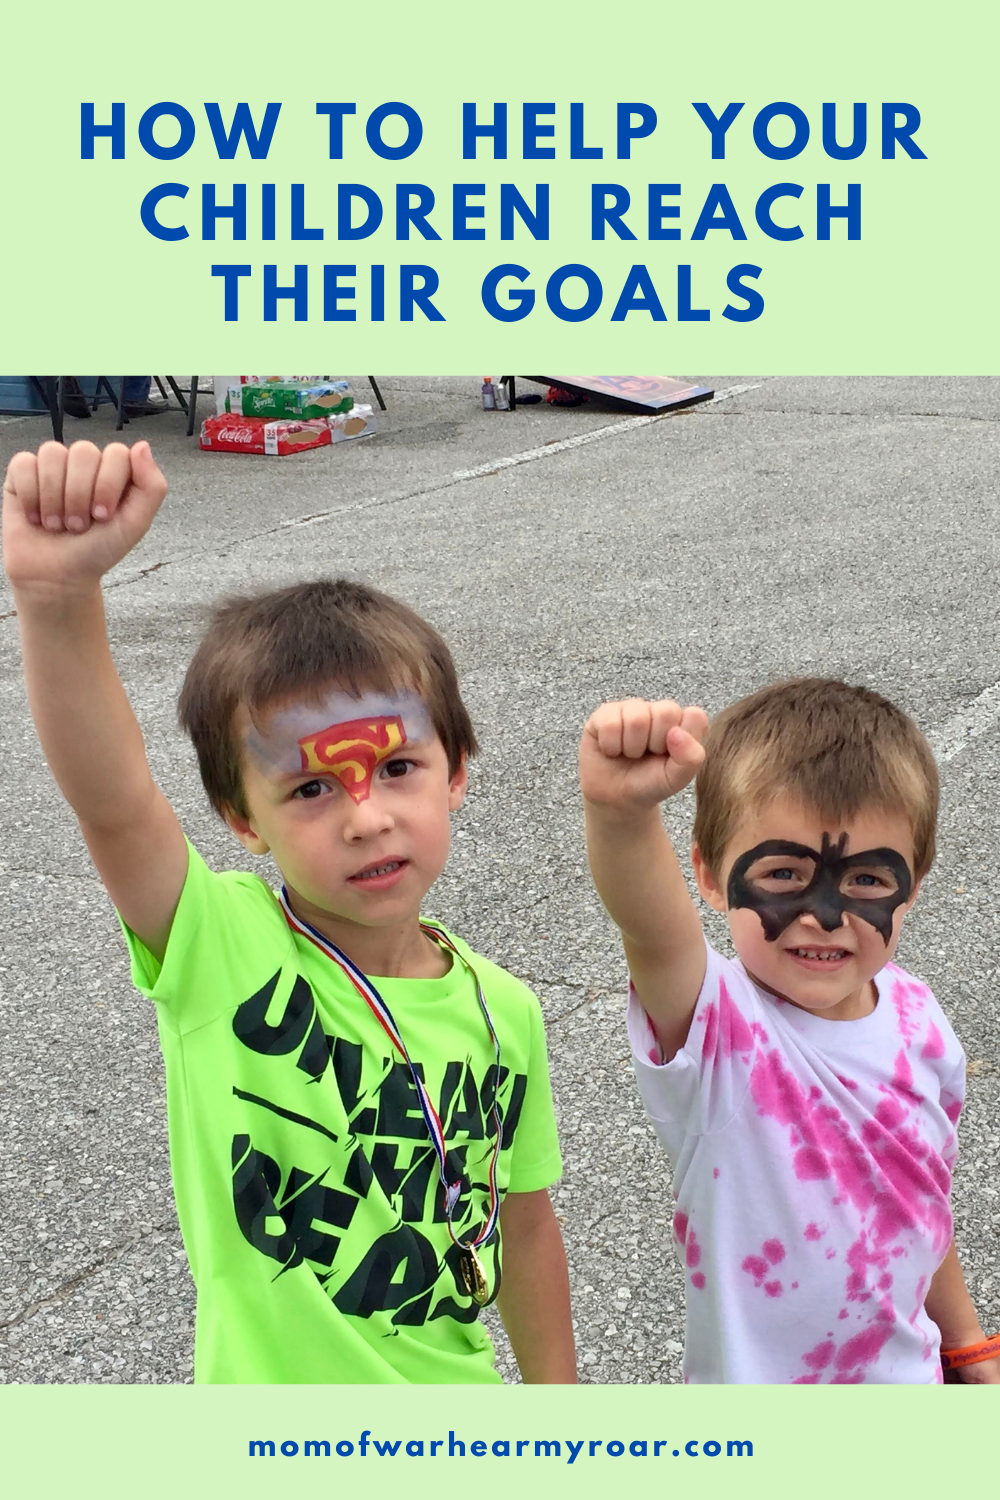 Help Your Children Reach Their Goals Pinterest pin